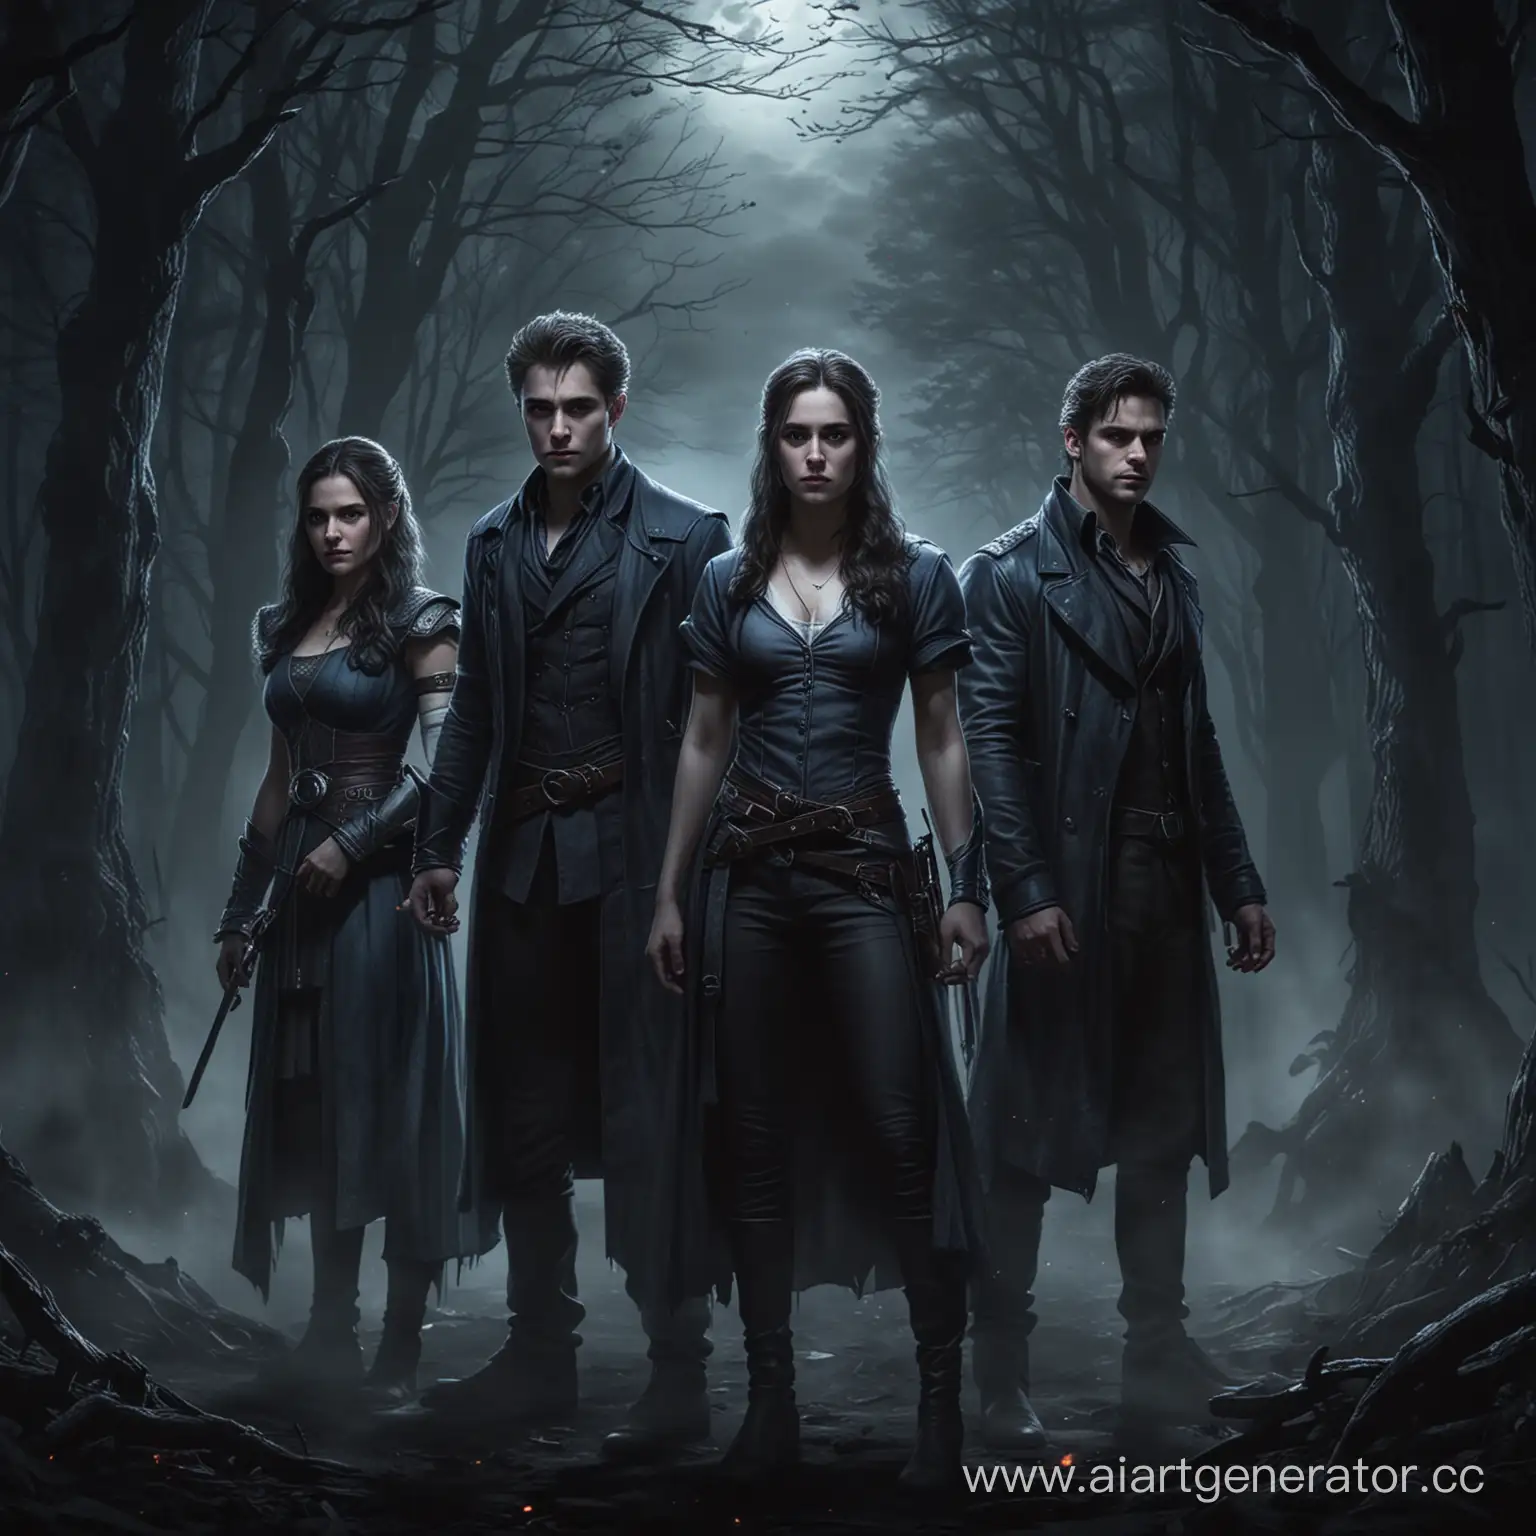 Twilight-Alliance-Women-and-Men-Stand-in-Darkness